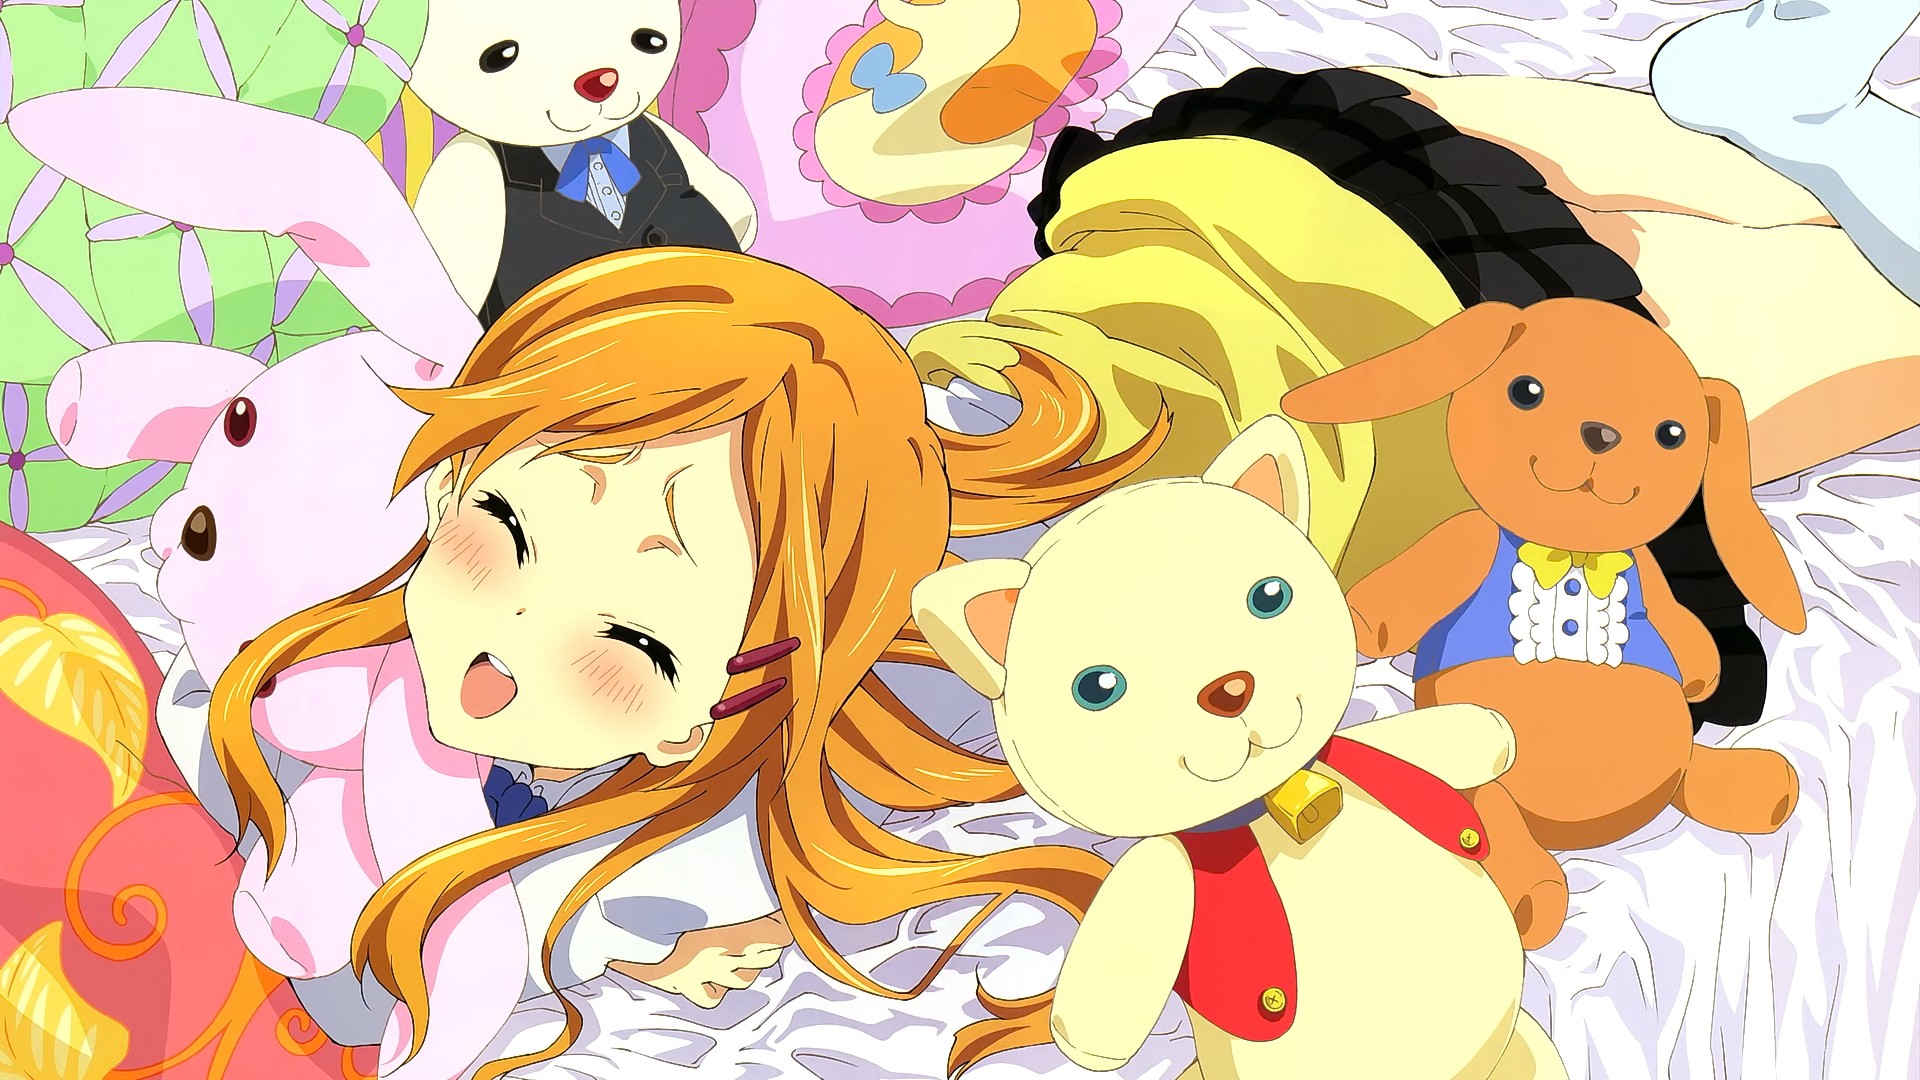 Anime 1920x1080 anime anime girls long hair closed eyes open mouth smiling plush toy